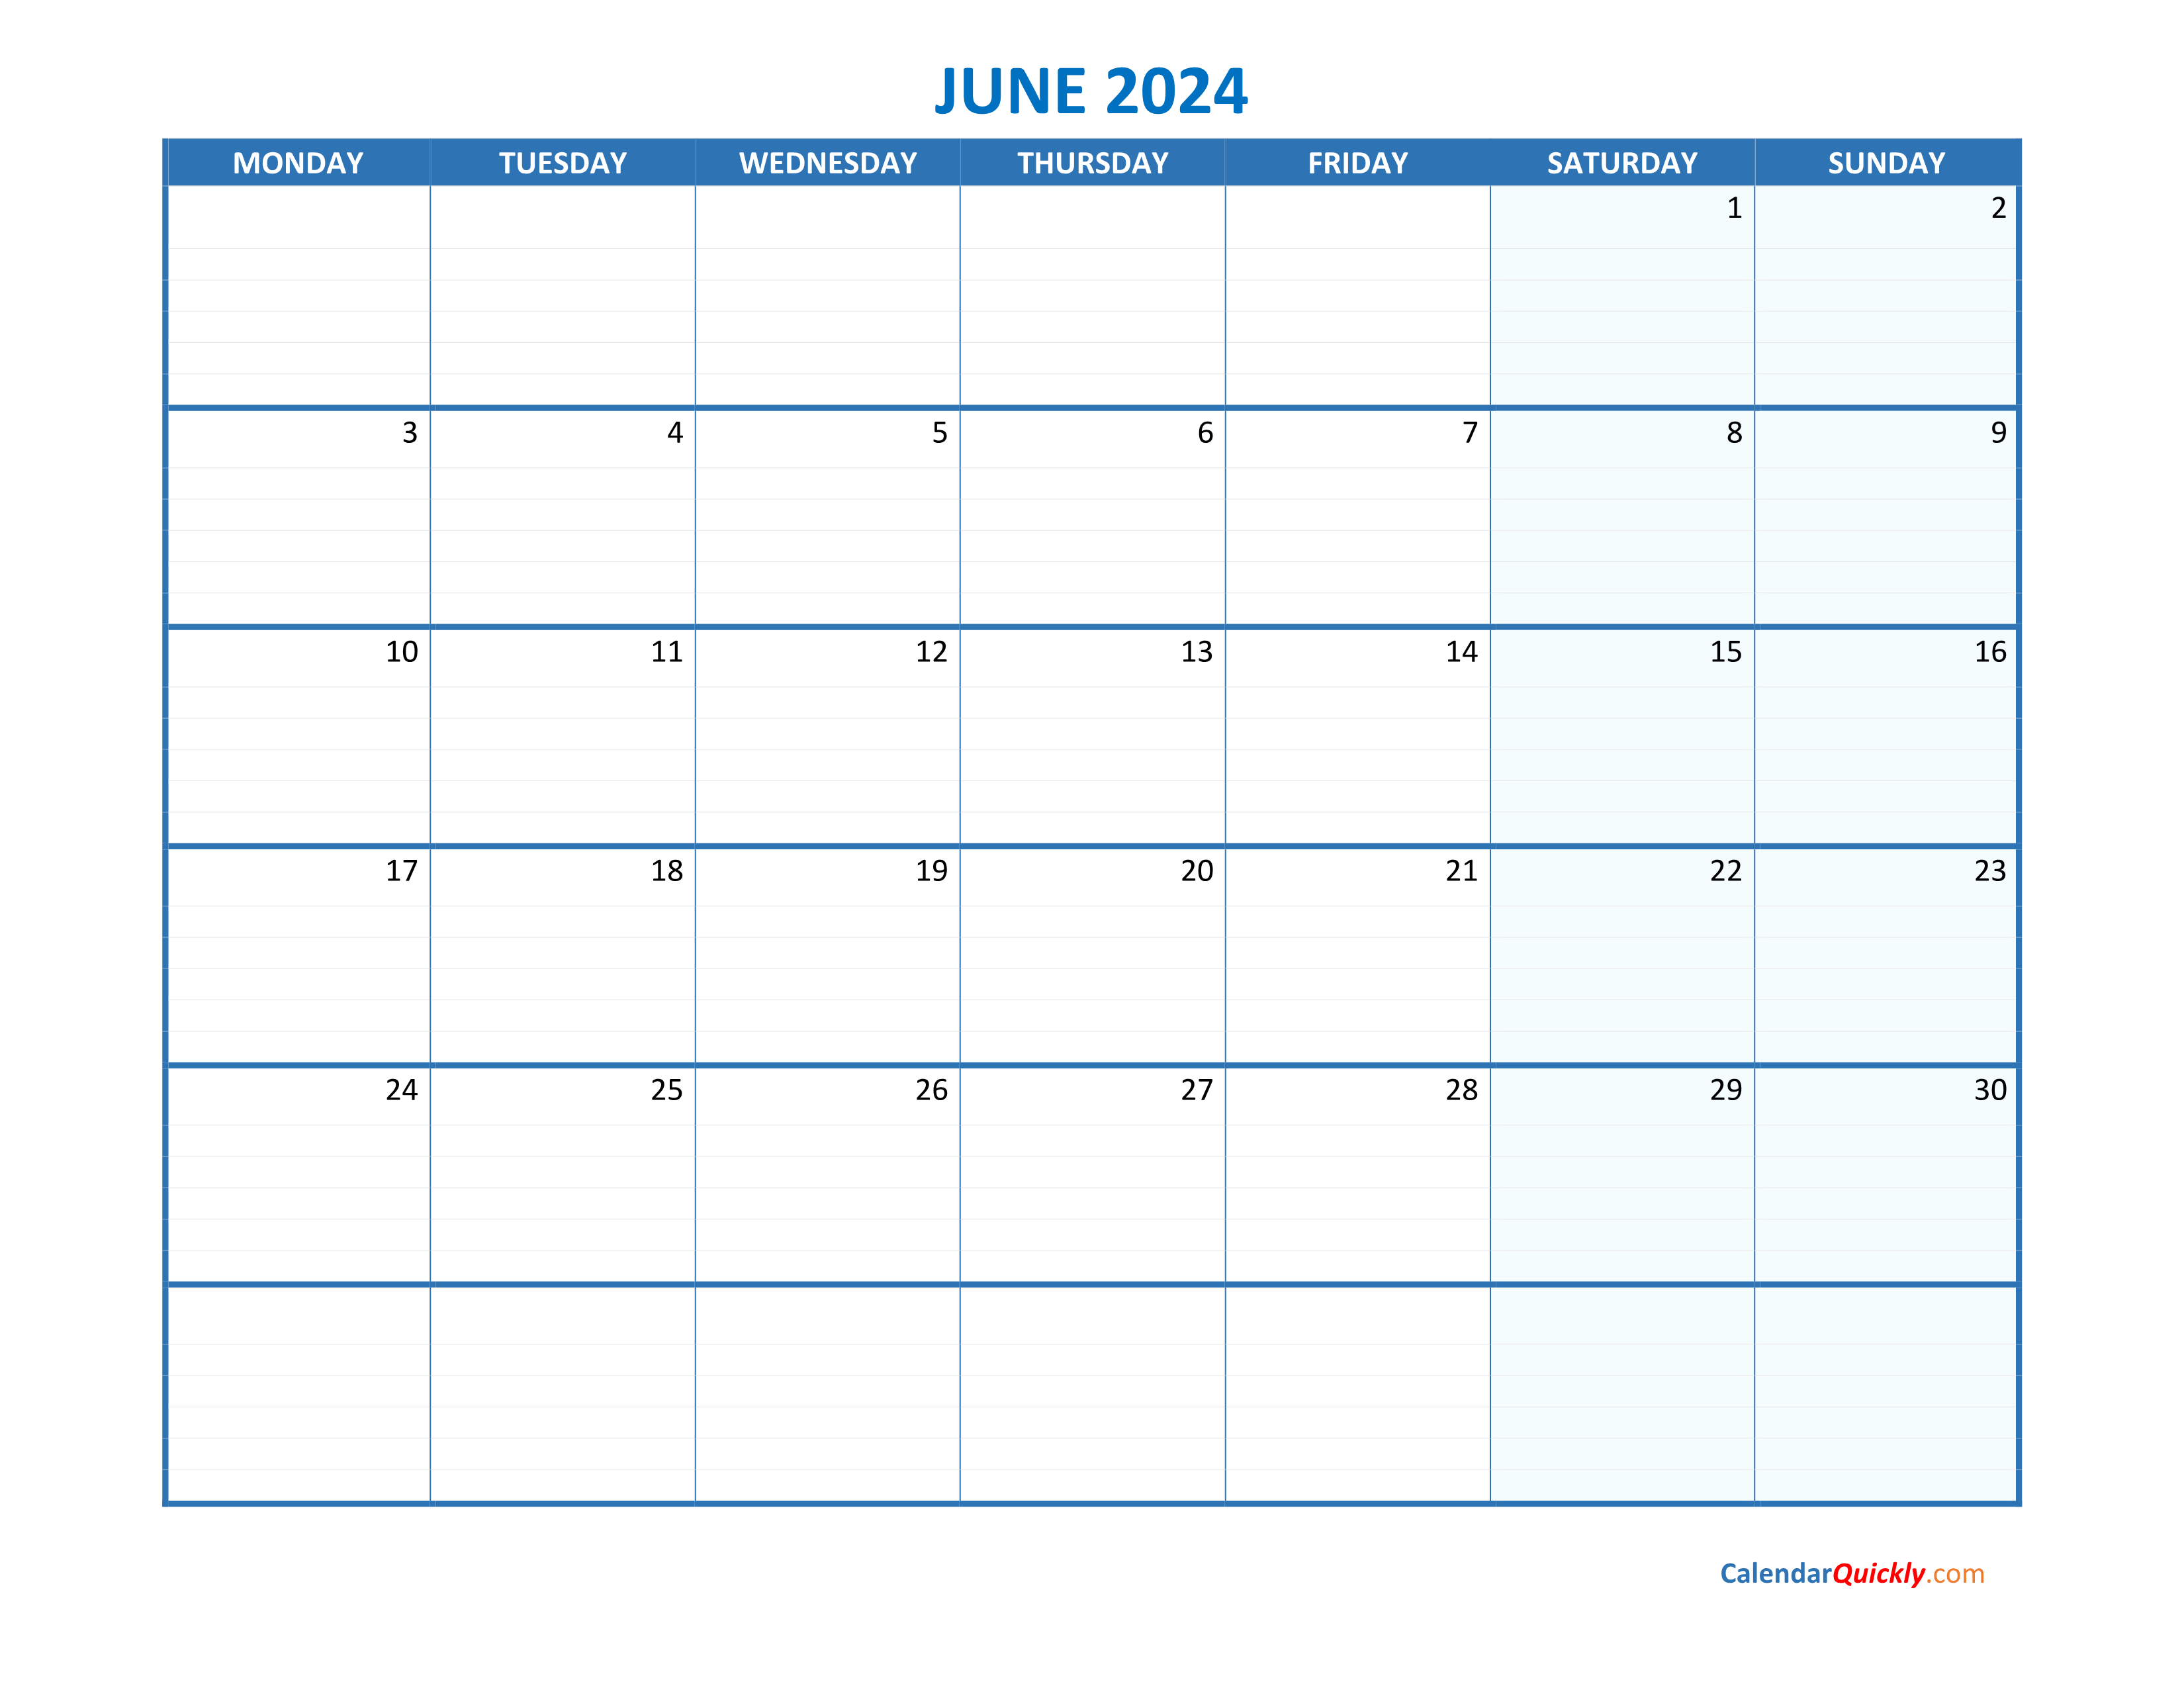 June Monday 2024 Blank Calendar Calendar Quickly